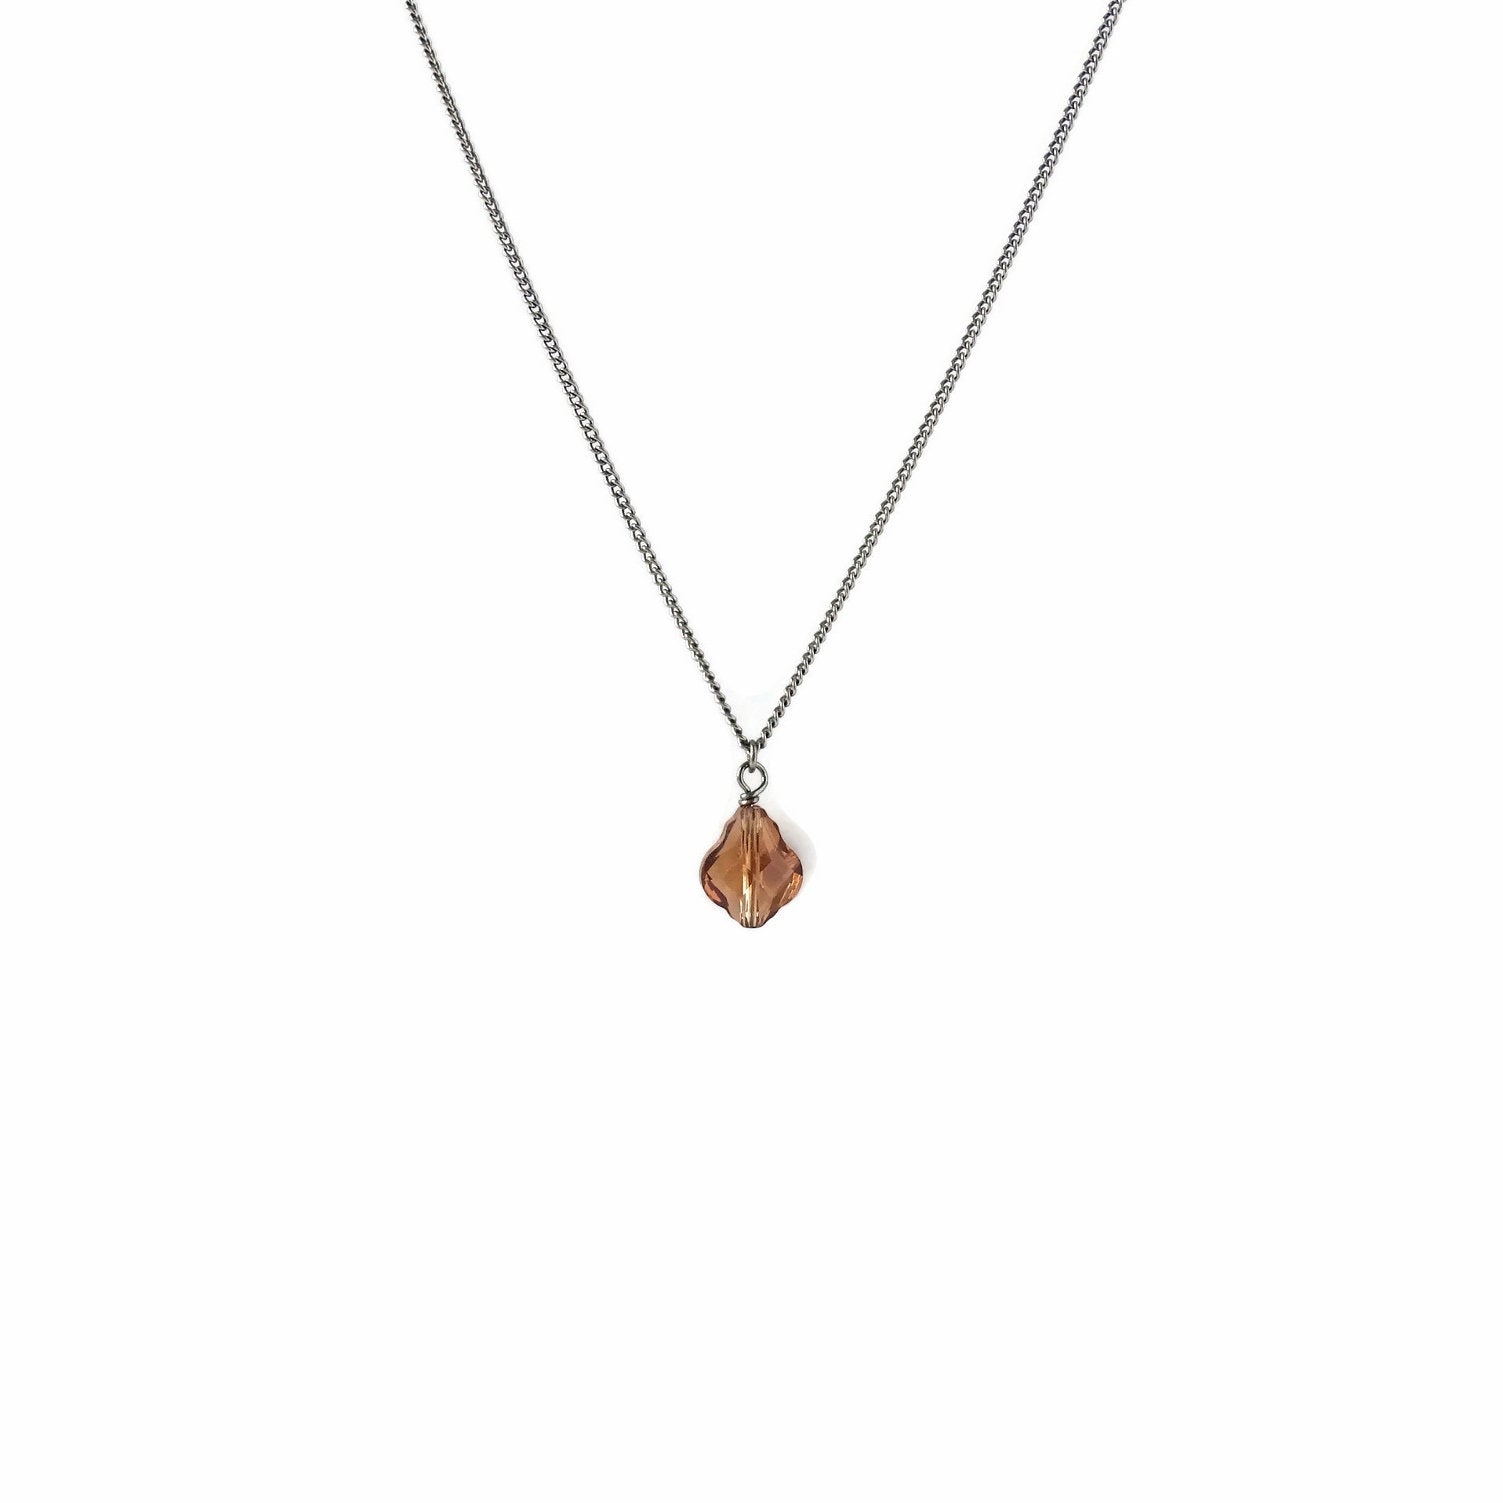 Topaz Baroque Crystal Titanium Necklace, Nickel Free Necklace For Sensitive Skin, Light Smoked Topaz Swarovski Crystal Pure Titanium Jewelry